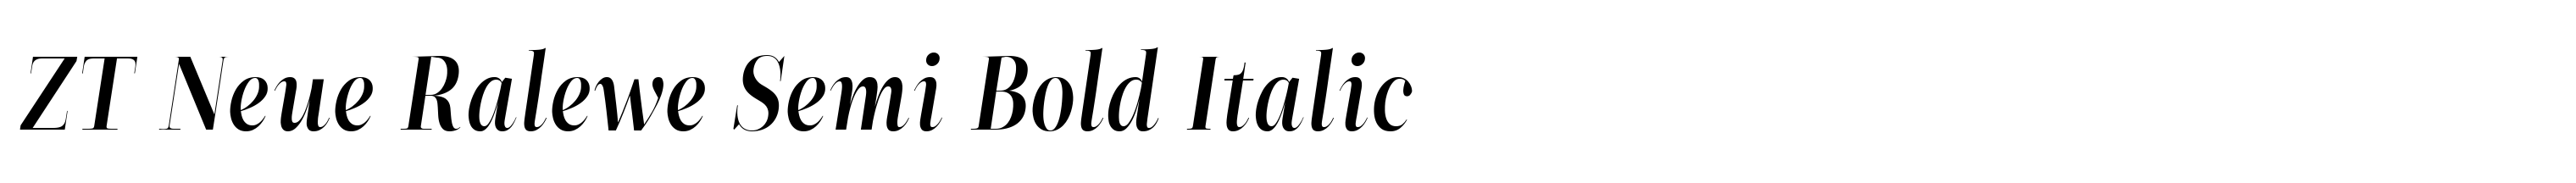 ZT Neue Ralewe Semi Bold Italic